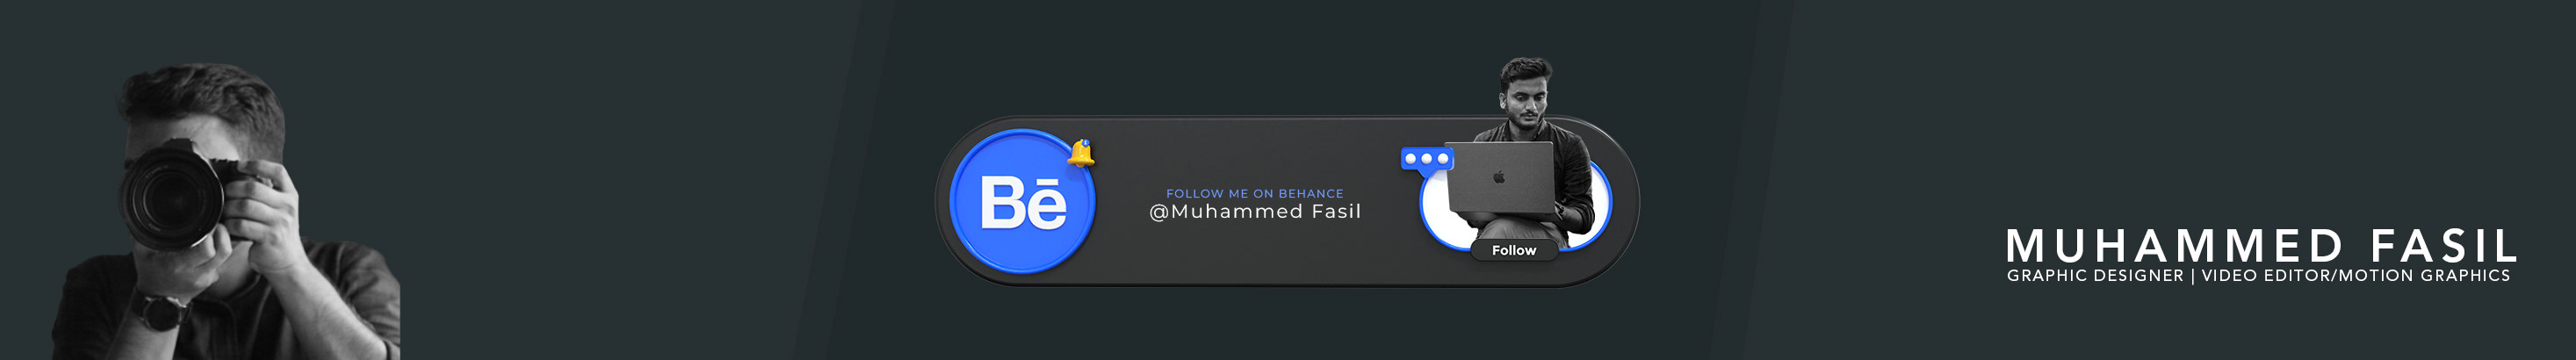 Banner de perfil de Muhammed Fasil